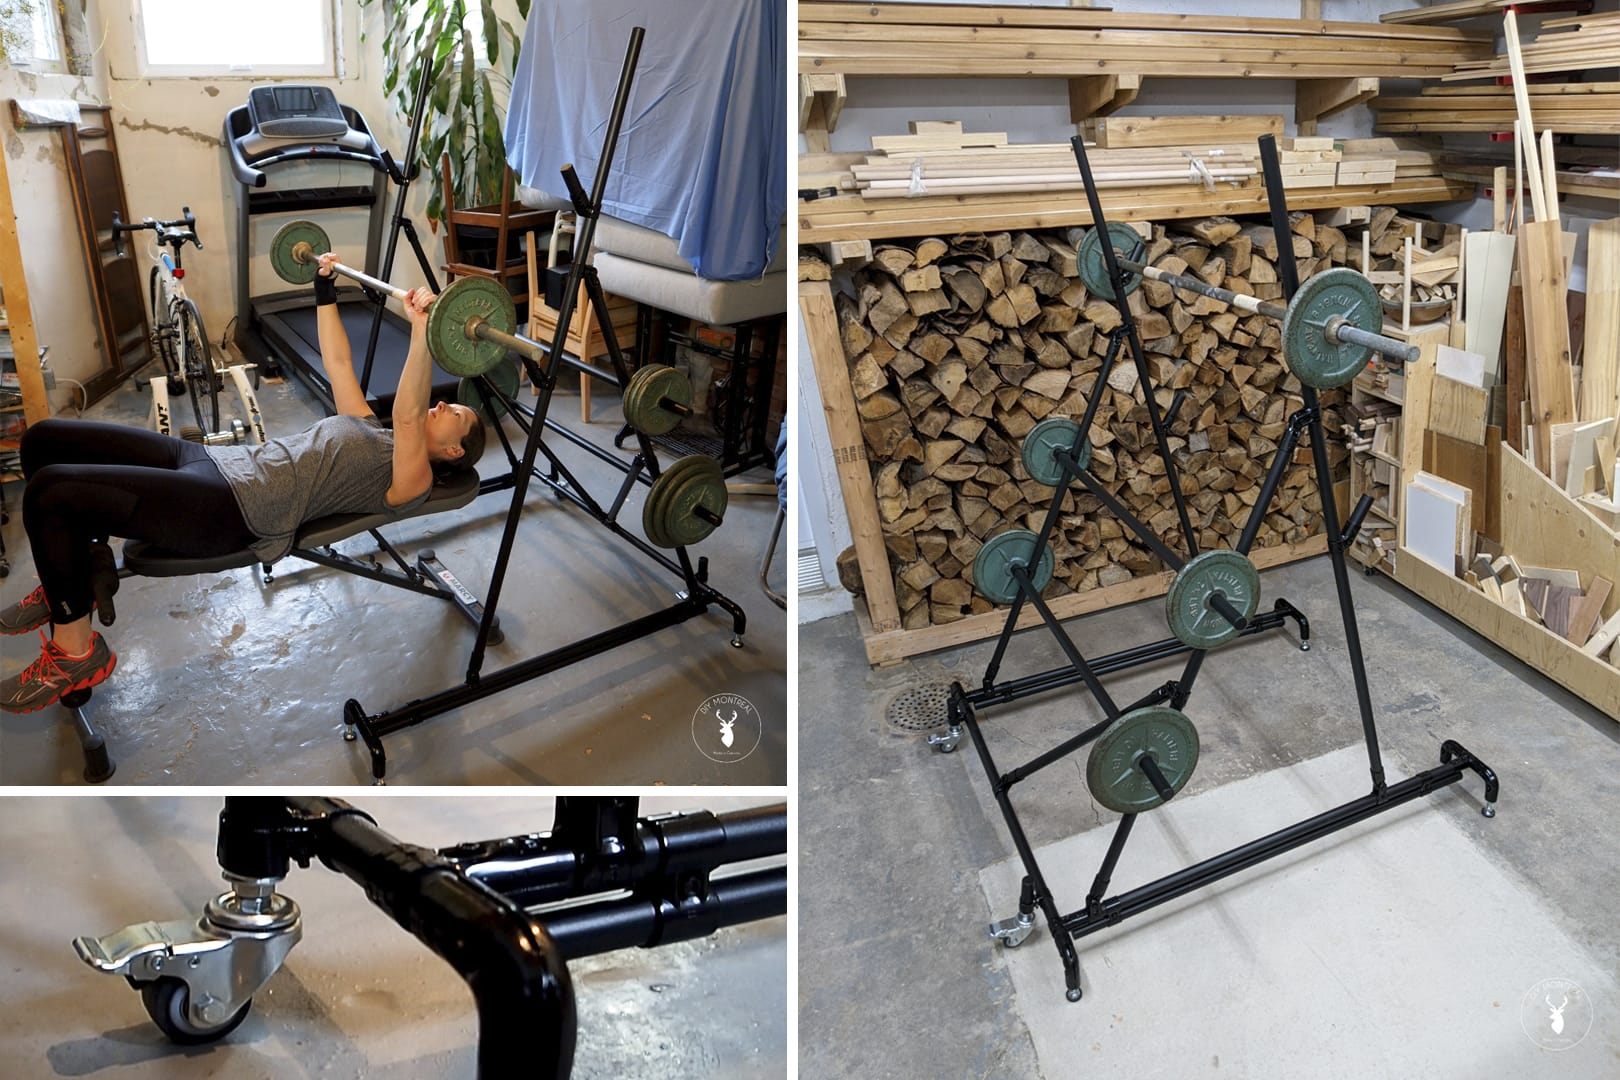 DIY squat rack